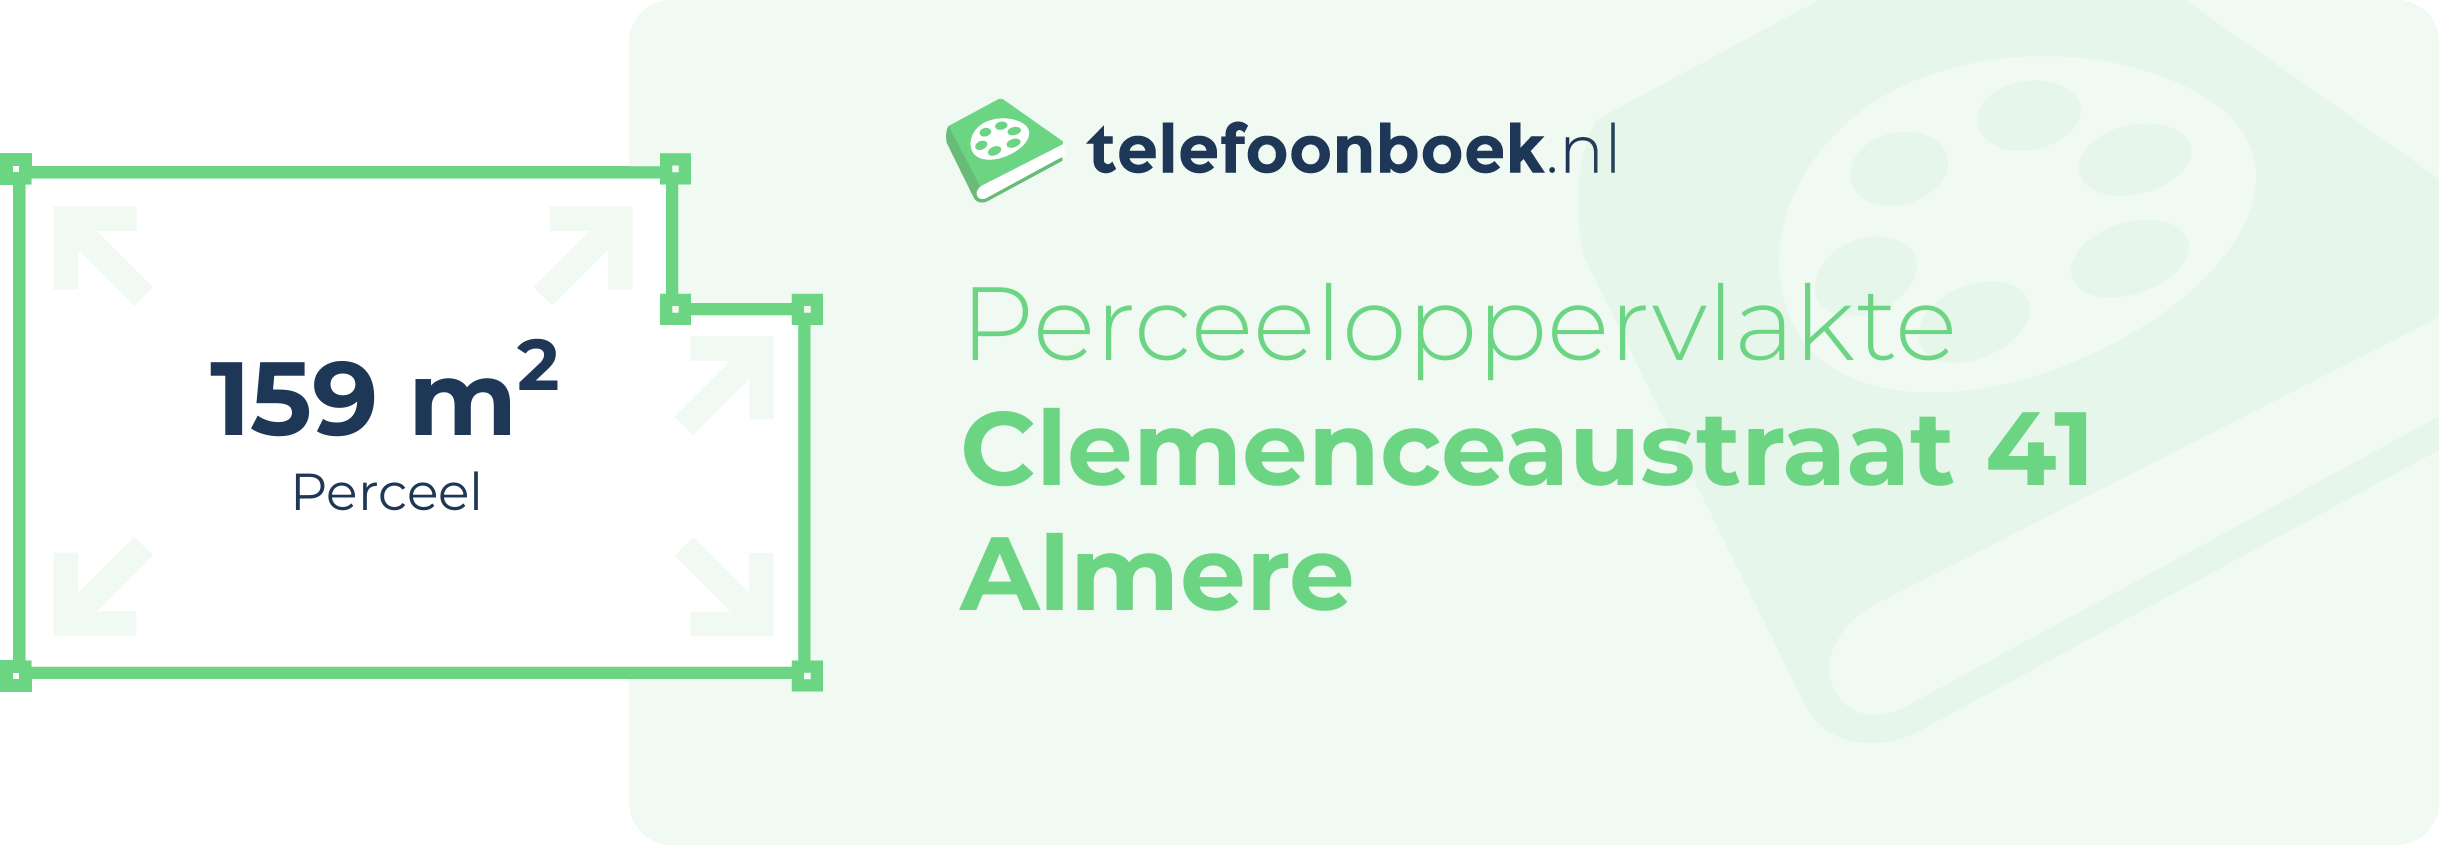 Perceeloppervlakte Clemenceaustraat 41 Almere